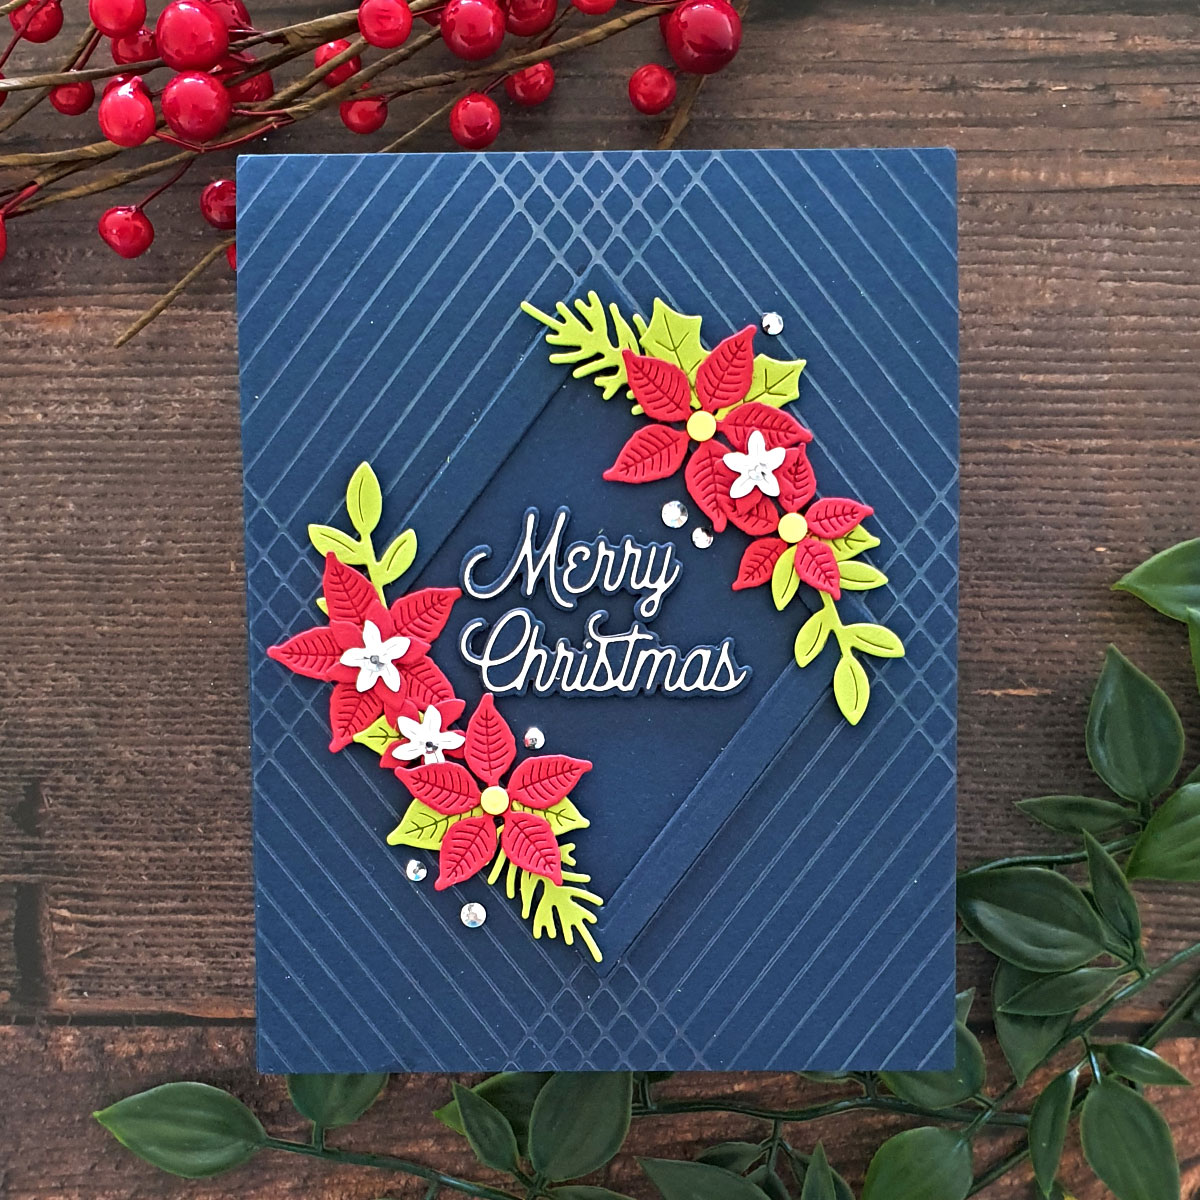 Foiled Glimmer Greetings Cards with Lisa Tilson - Spellbinders Blog